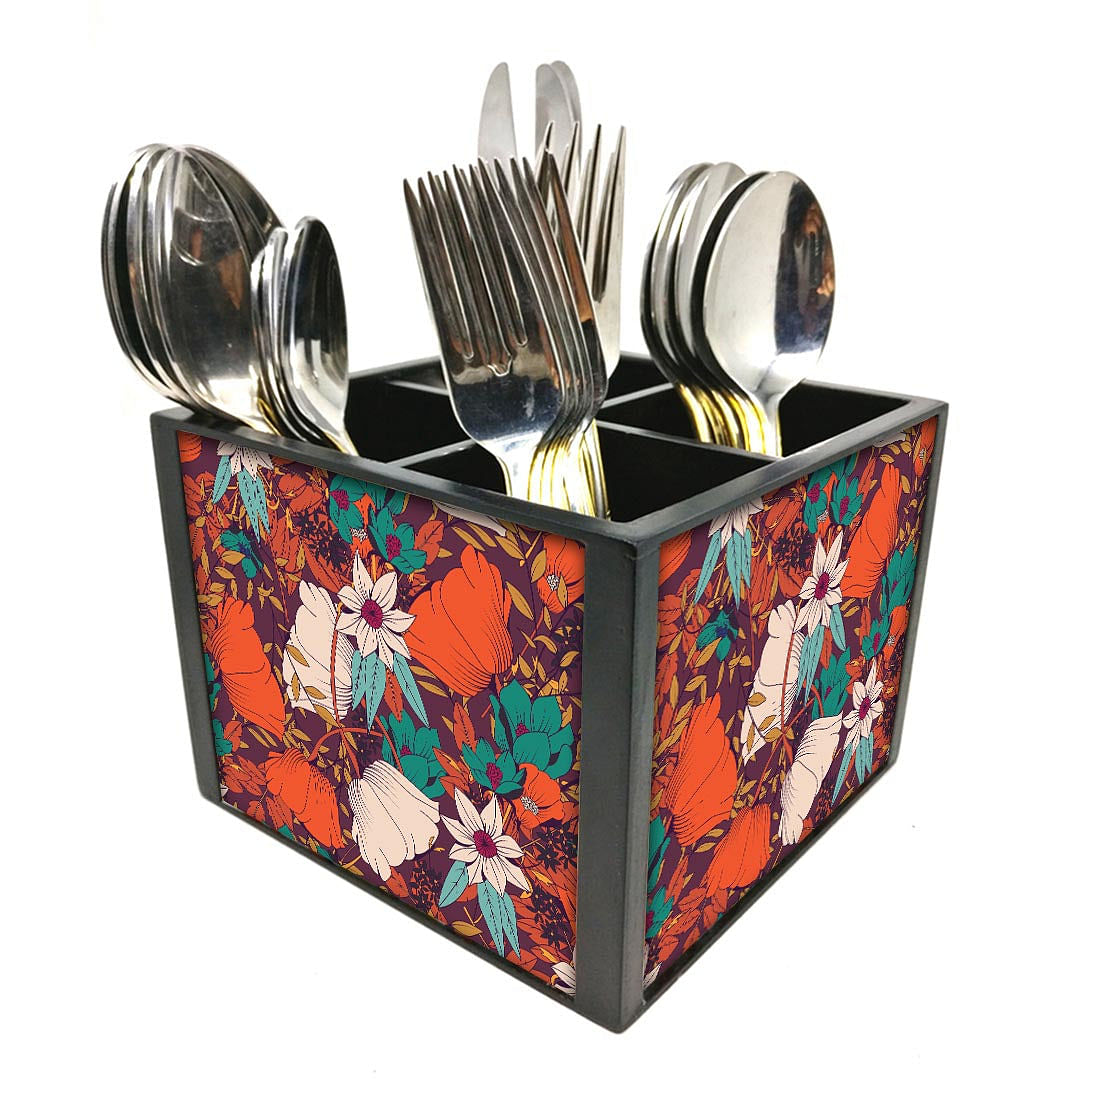 Cutlery Holder for Kitchen Silverware Caddy Organizer - Elegance Nutcase